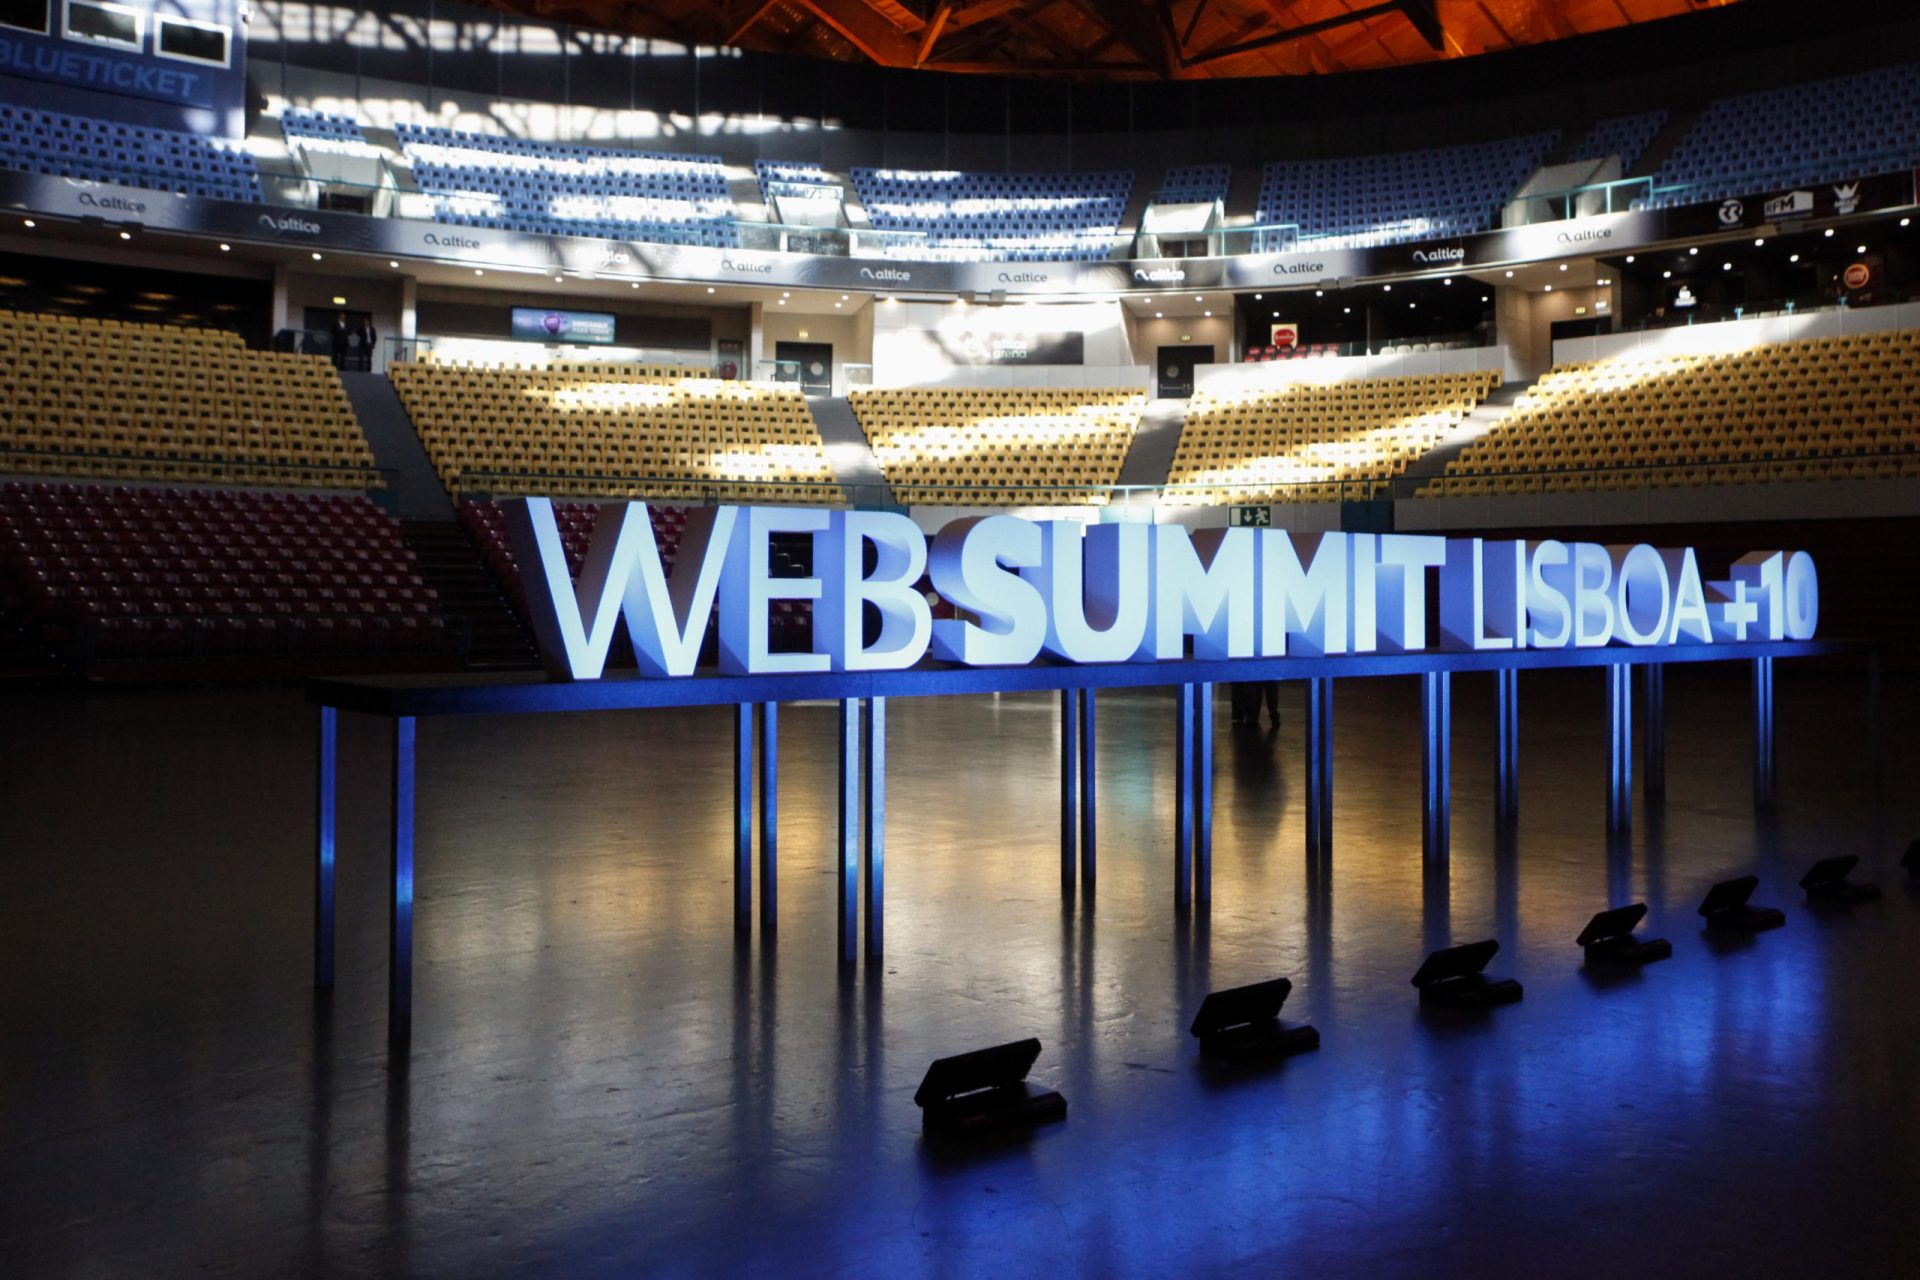 40ª Rampa Internacional da Falperra promovida no Web summit